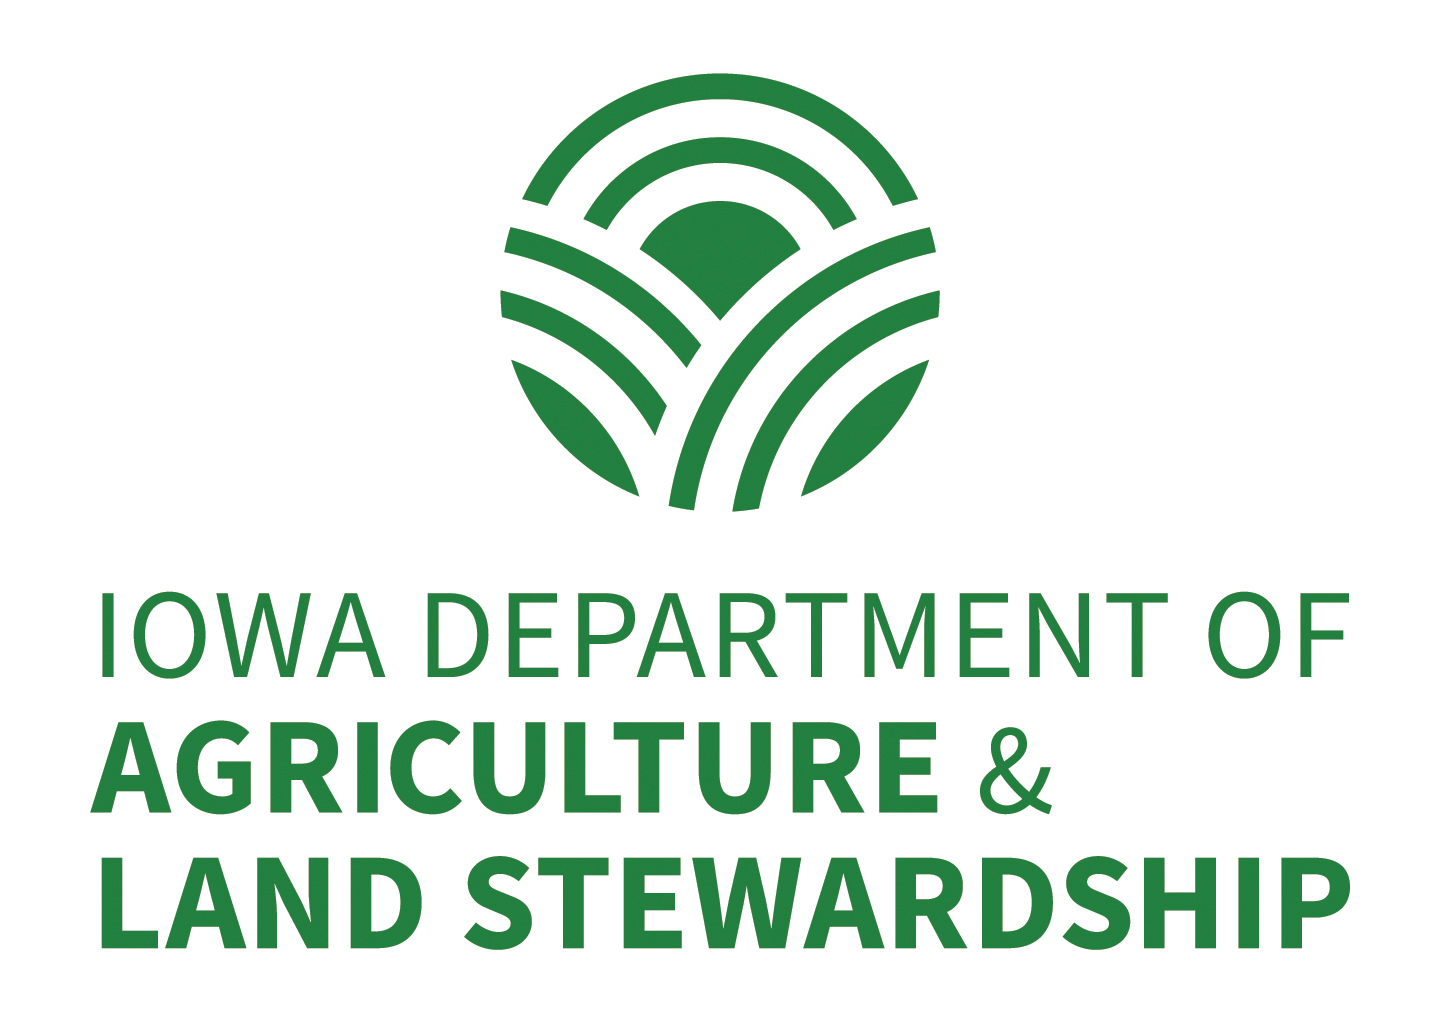 Iowa Department of Agriculture & Land Stewardship